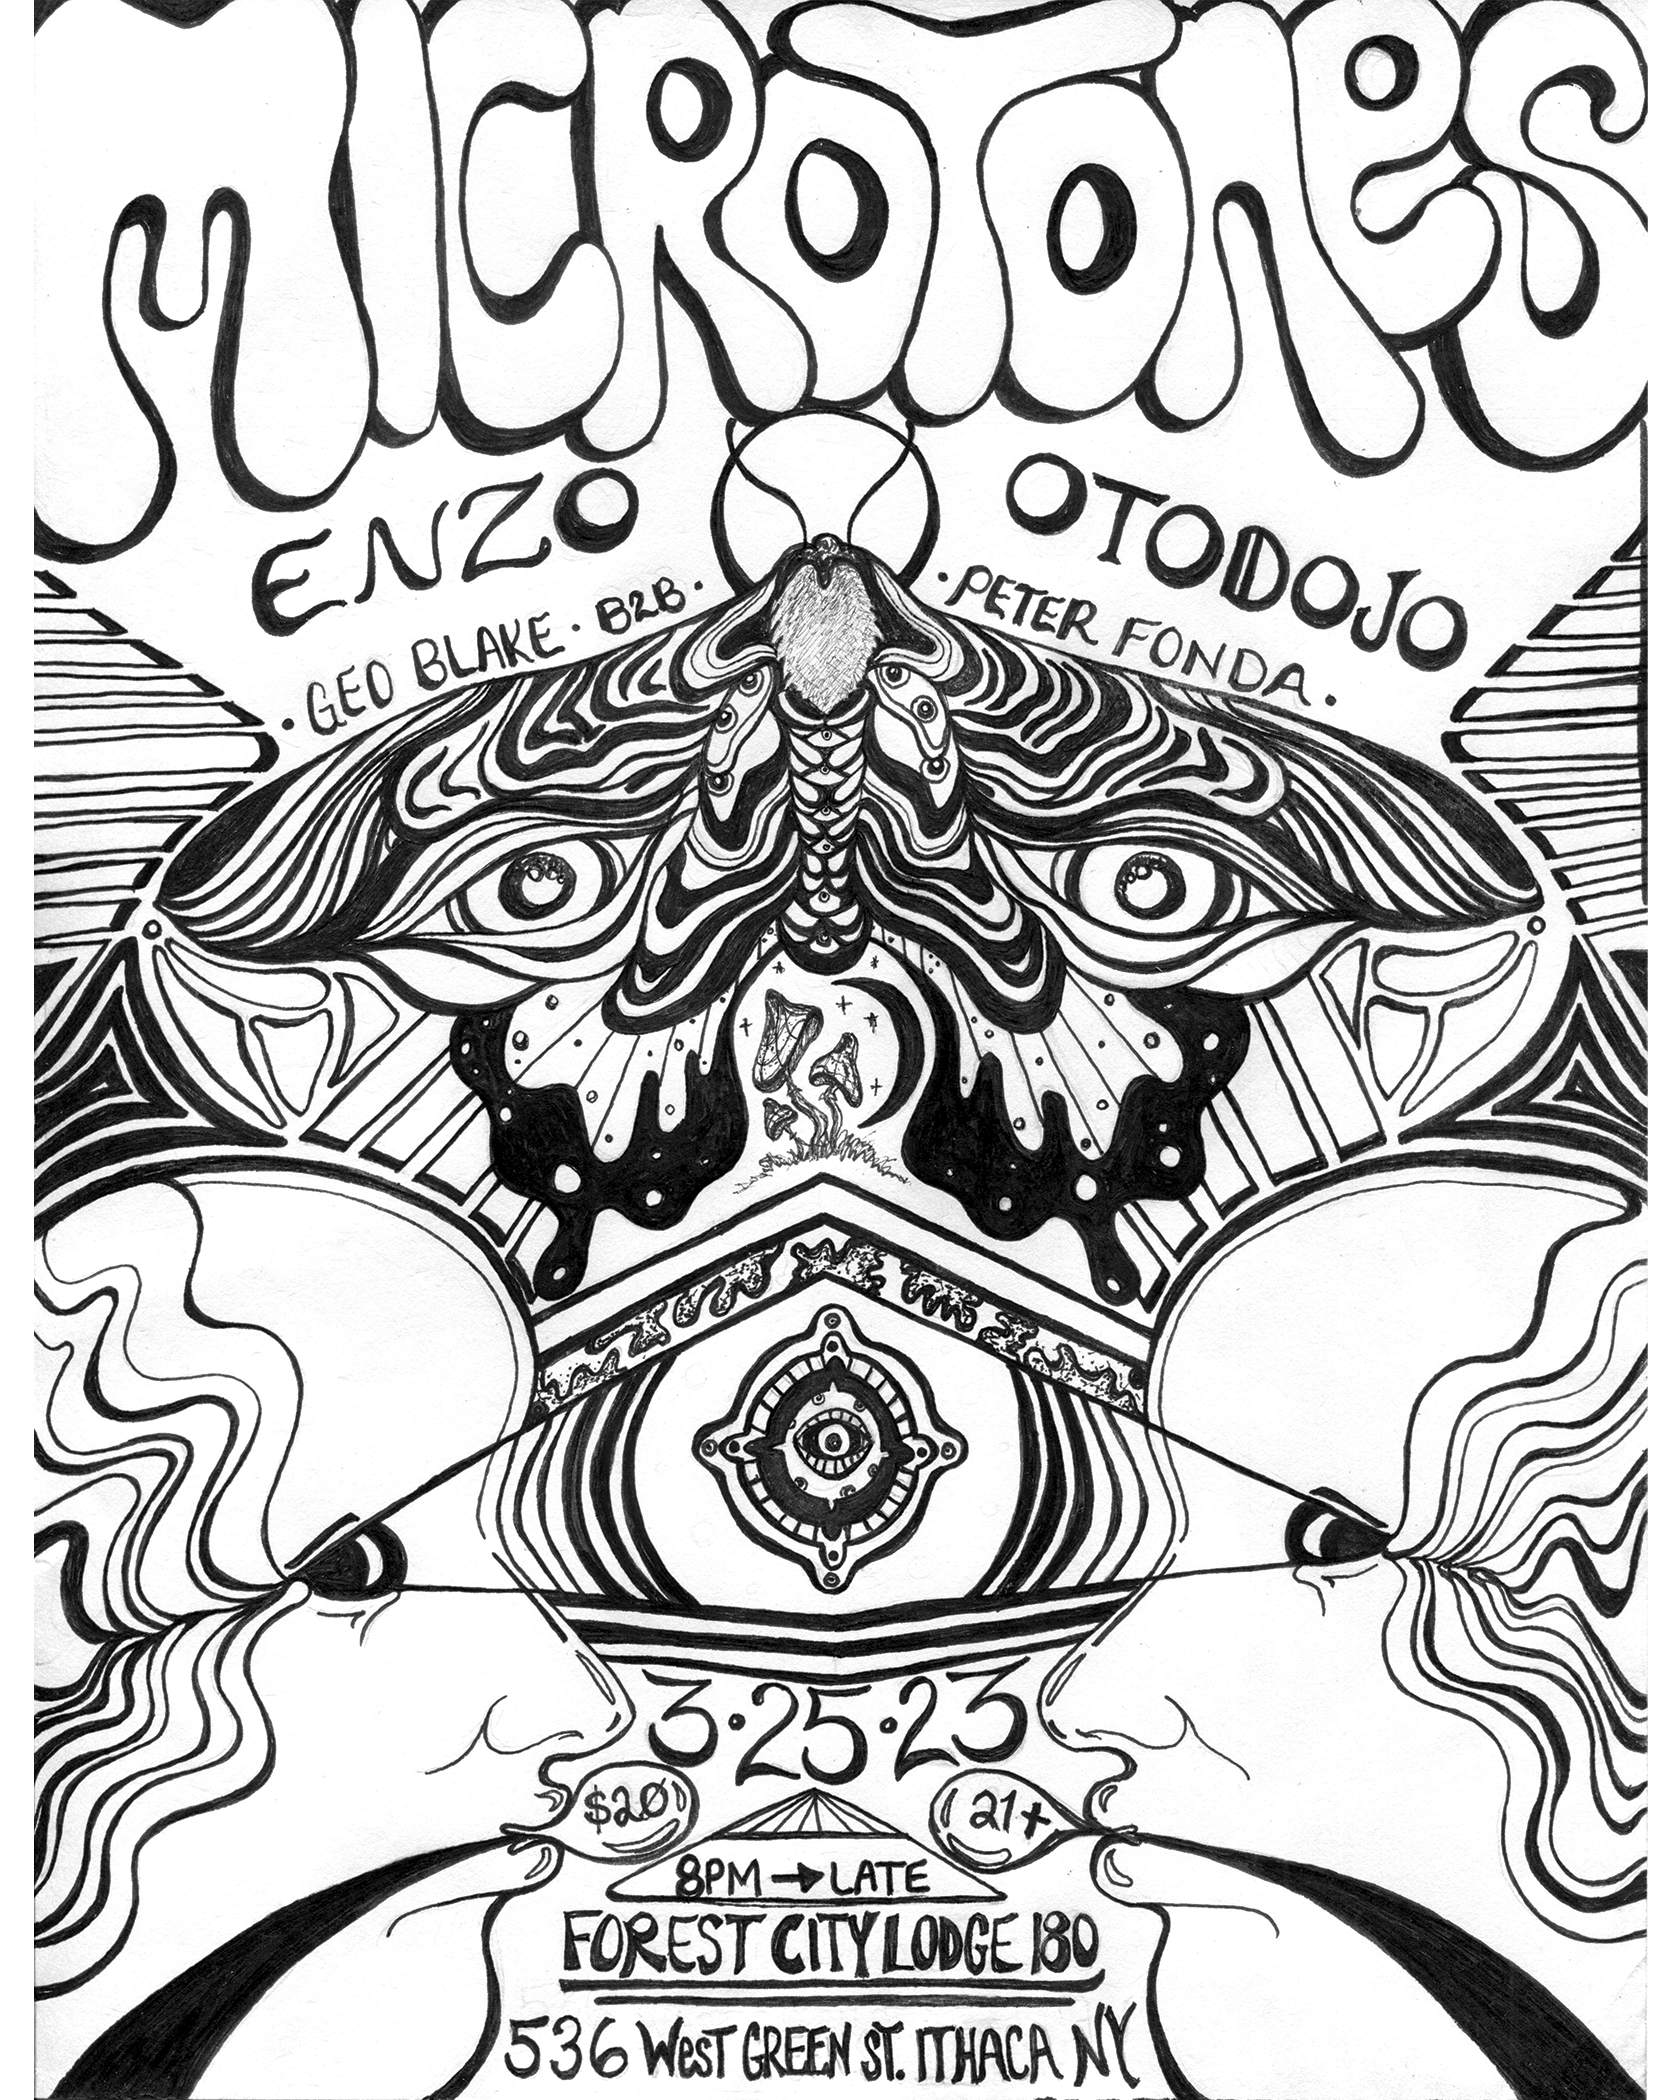 Microtones: Peter Fonda b2b Geo Blake, Otodojo - Página frontal